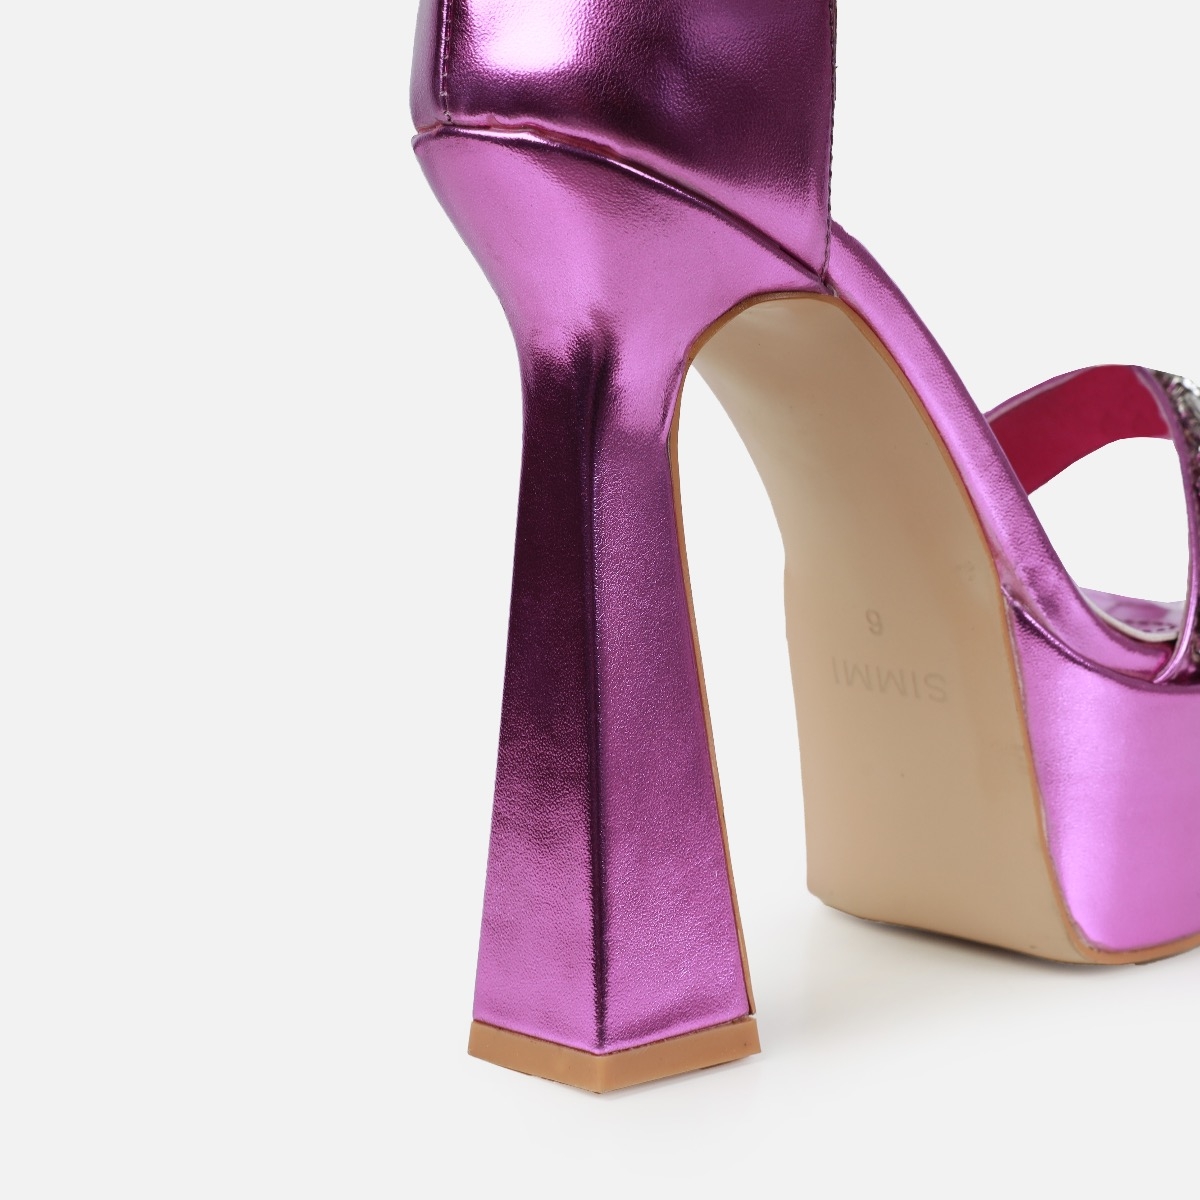 Madden Girl DION - Platform heels - magenta/pink - Zalando.ie